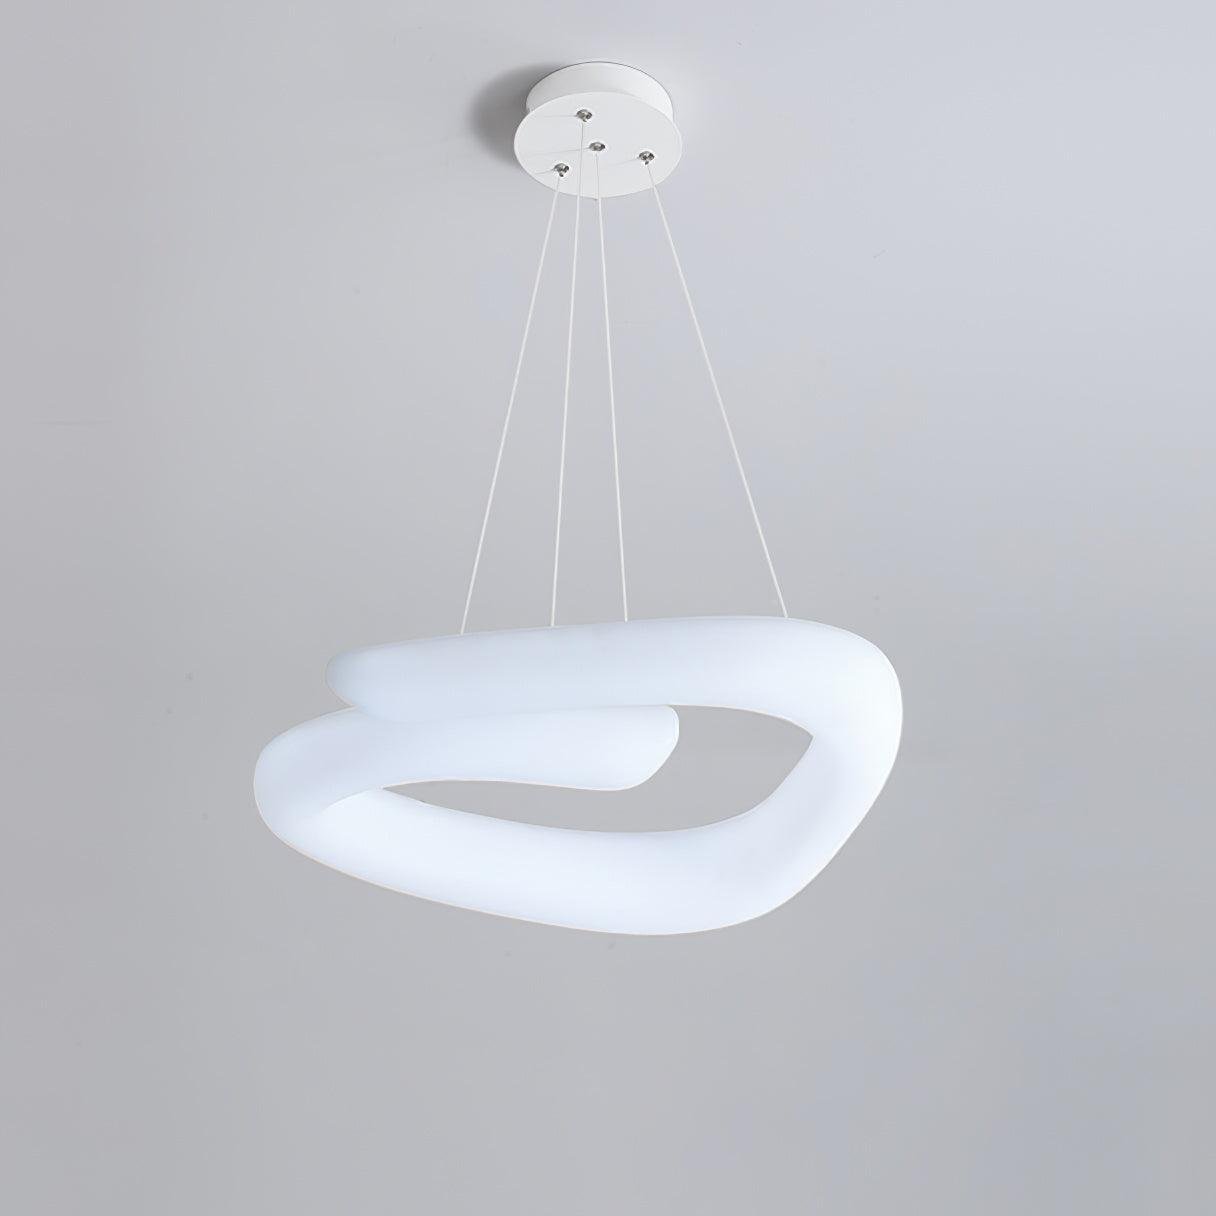 White Cloud Pendant Lamp Model A, Diameter 19.6" x Height 2.4" (50cm x 7cm), Cool White Illumination